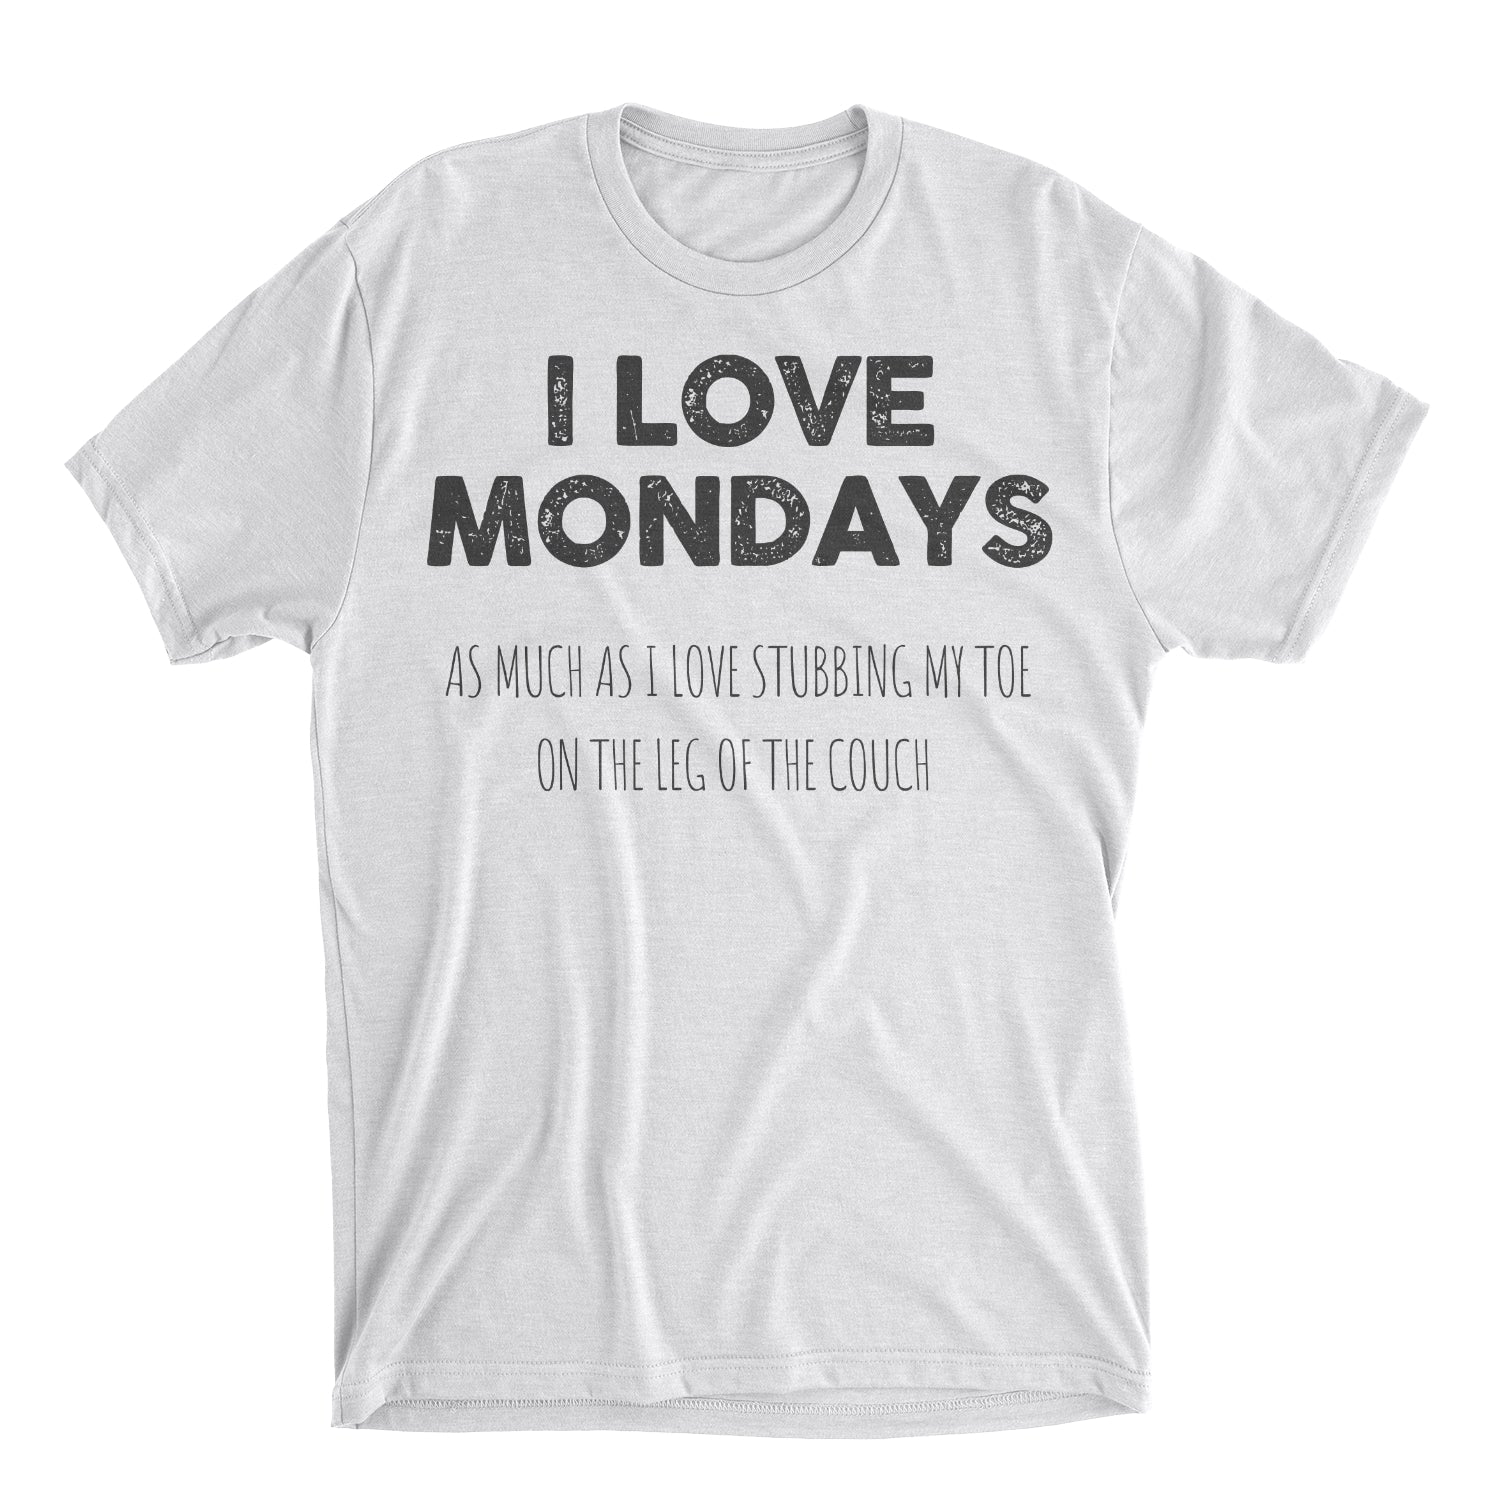 I Love Mondays Shirt